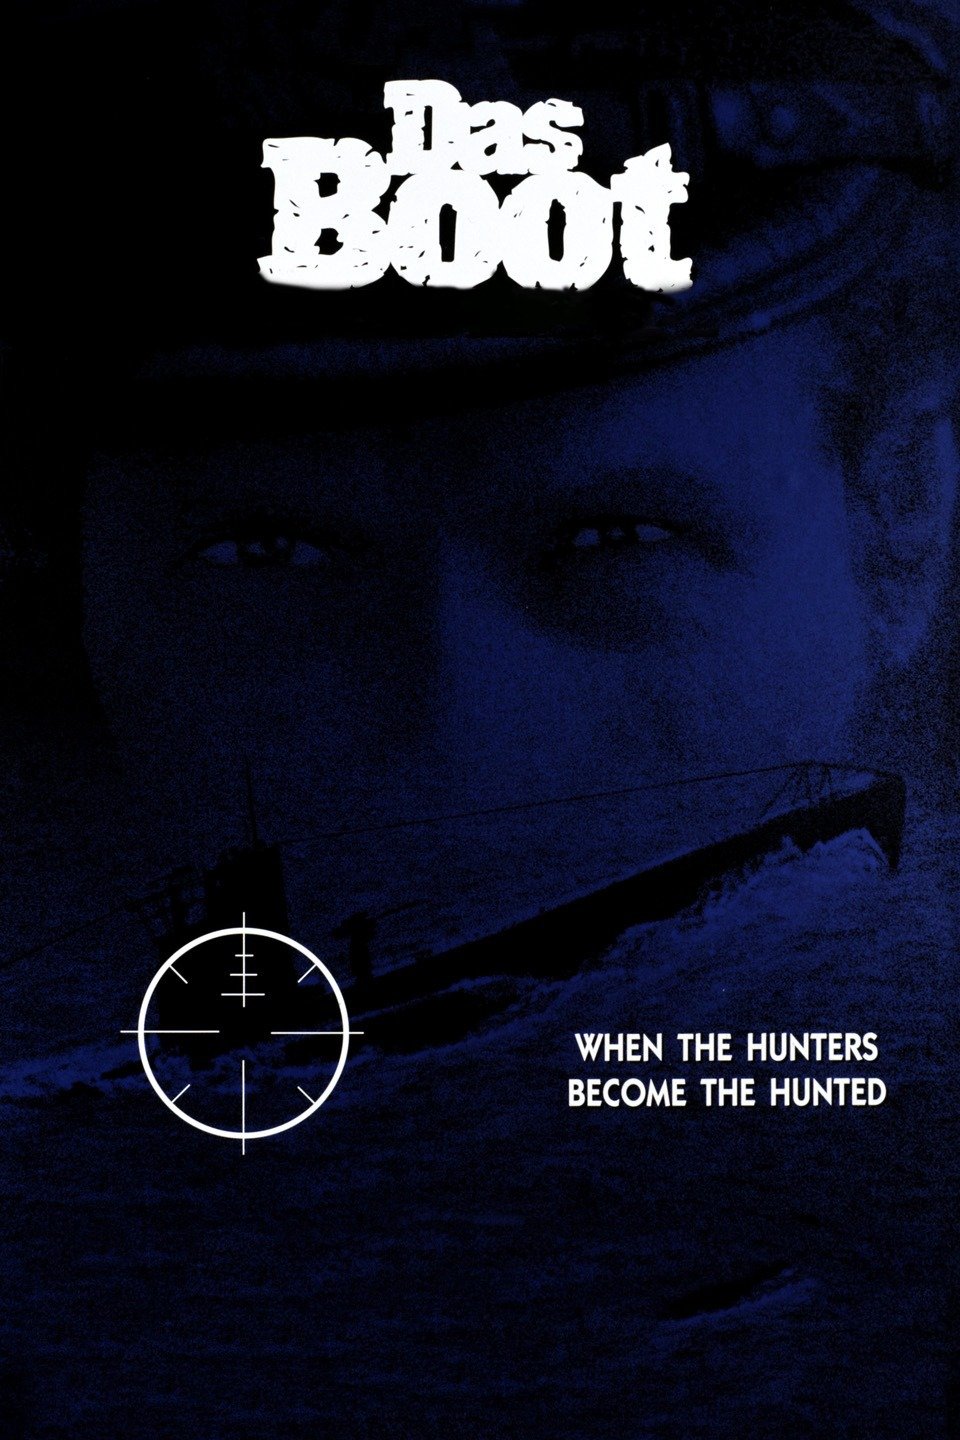 Das Boot (1981) | Soundeffects Wiki | Fandom